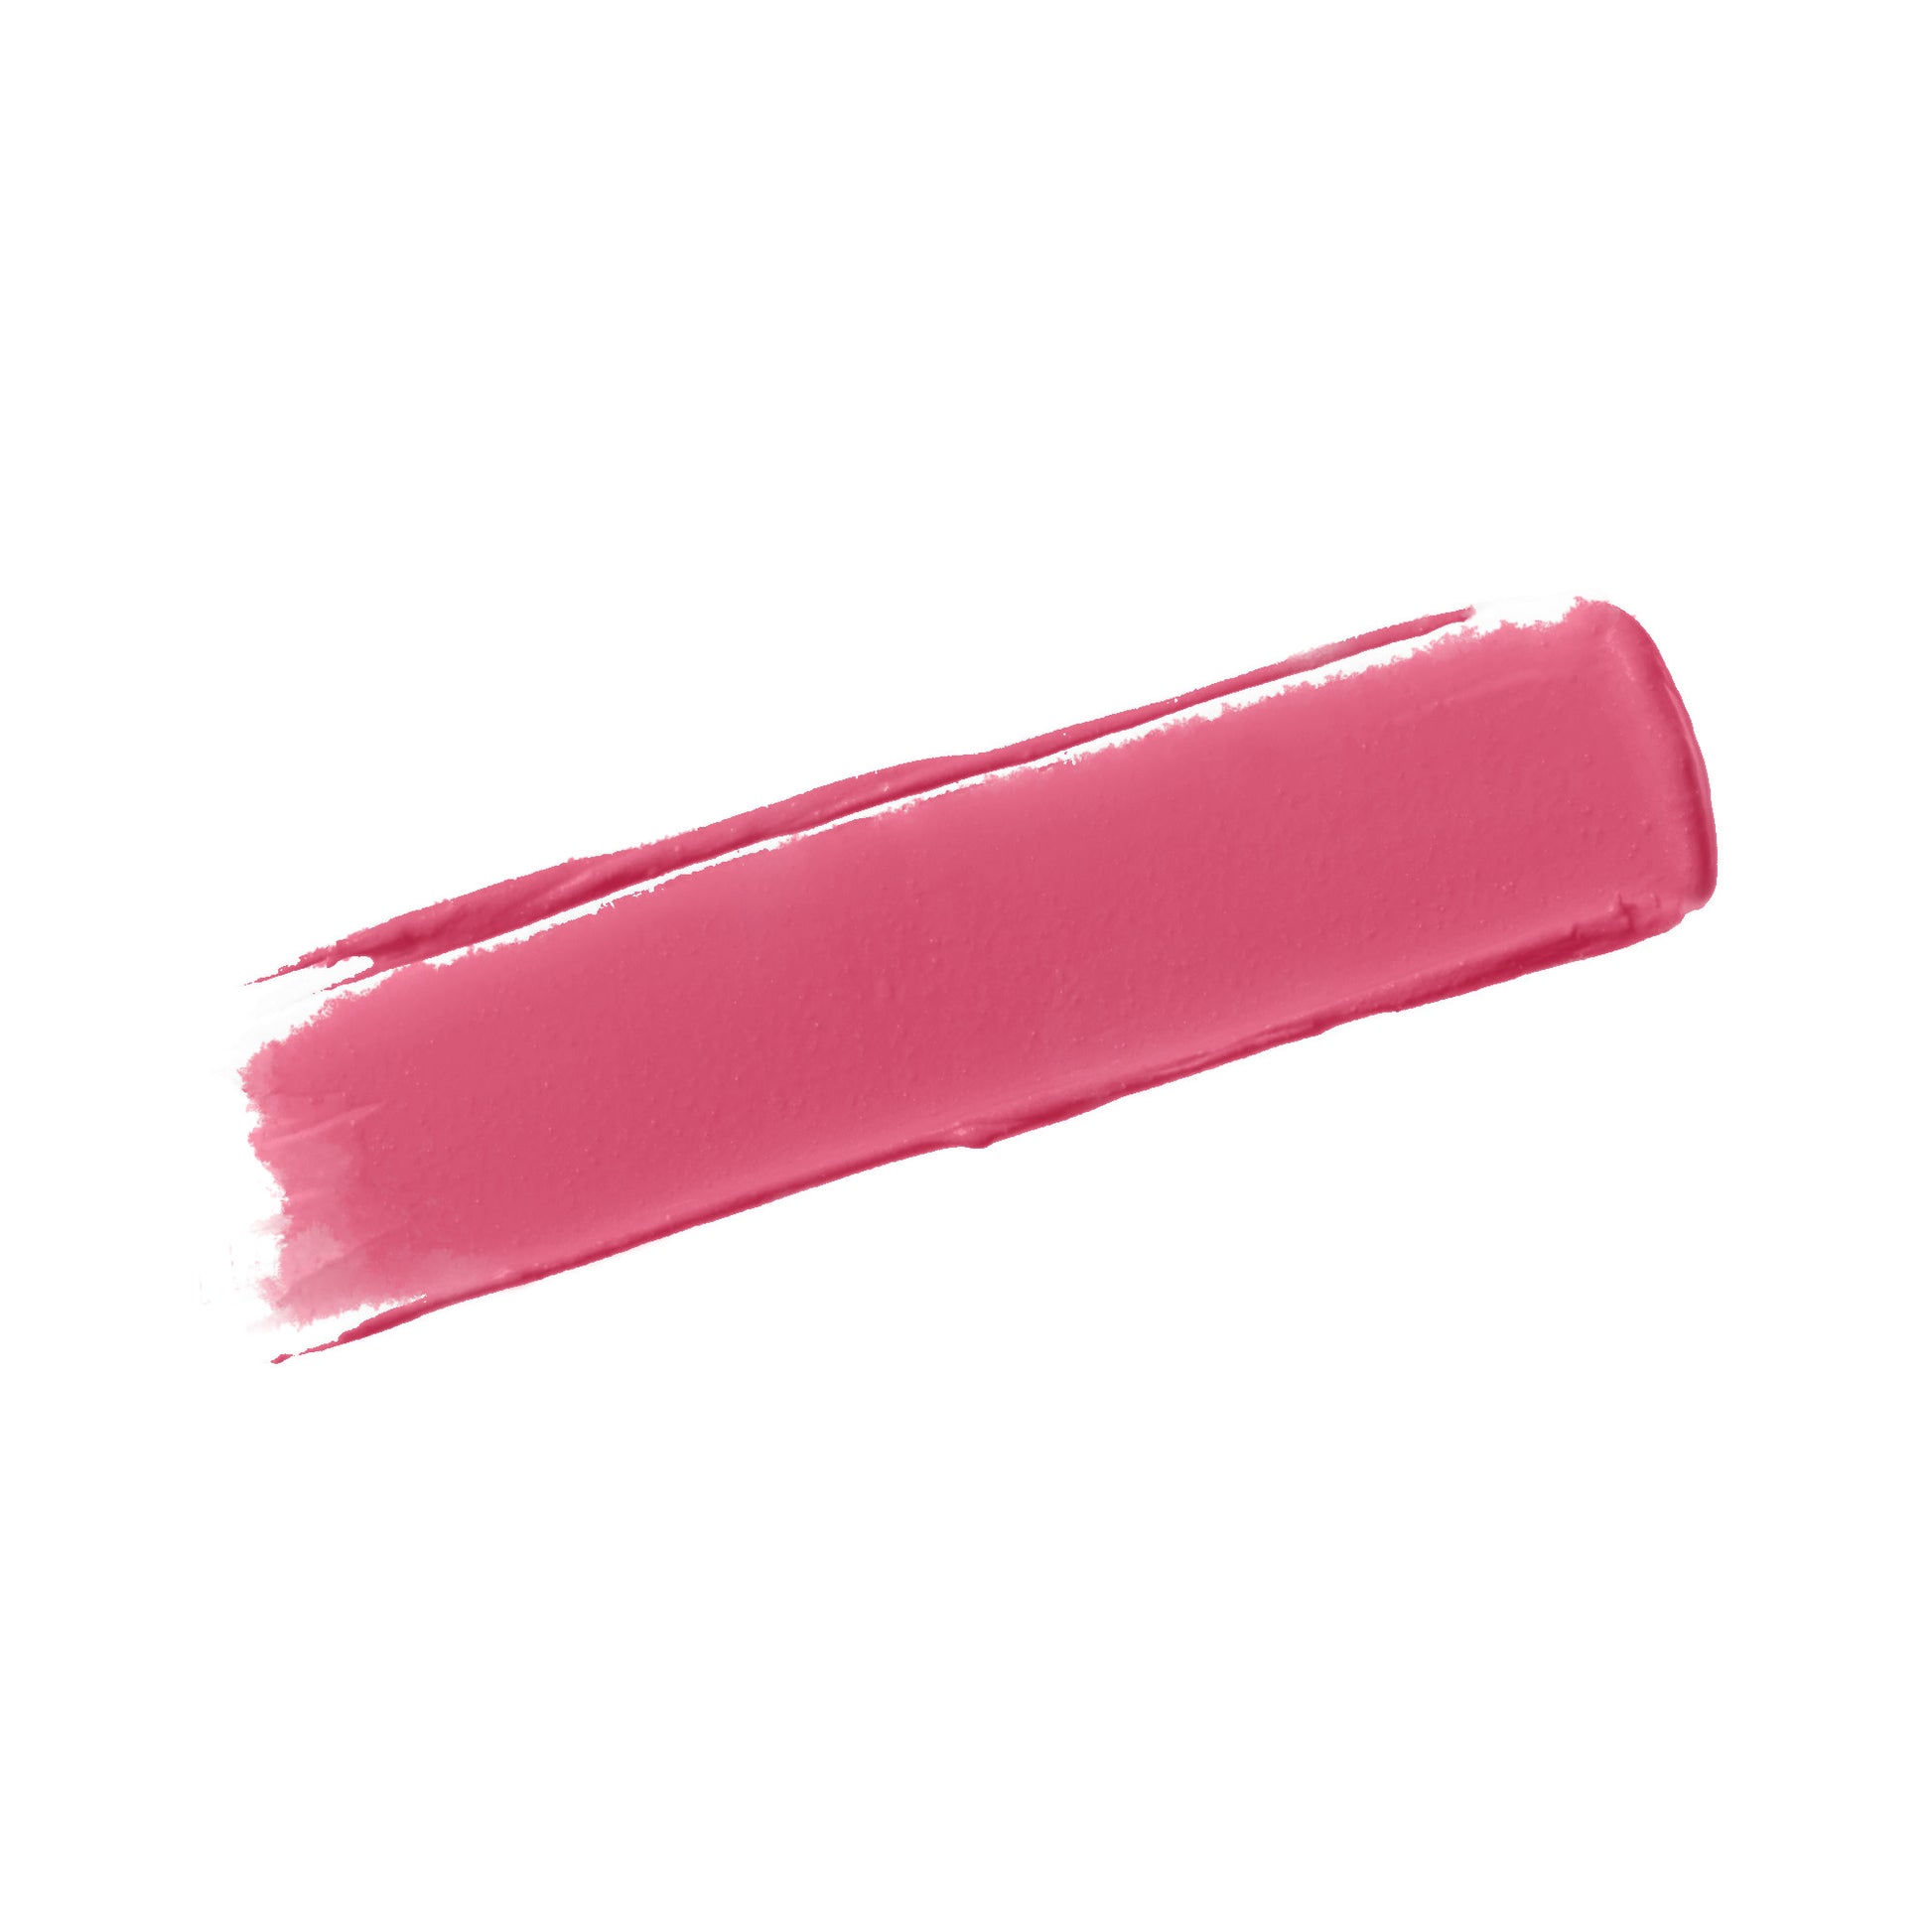 NXTE NXTEssence Shocking Pink Liquid Lip Stick Swatch Color